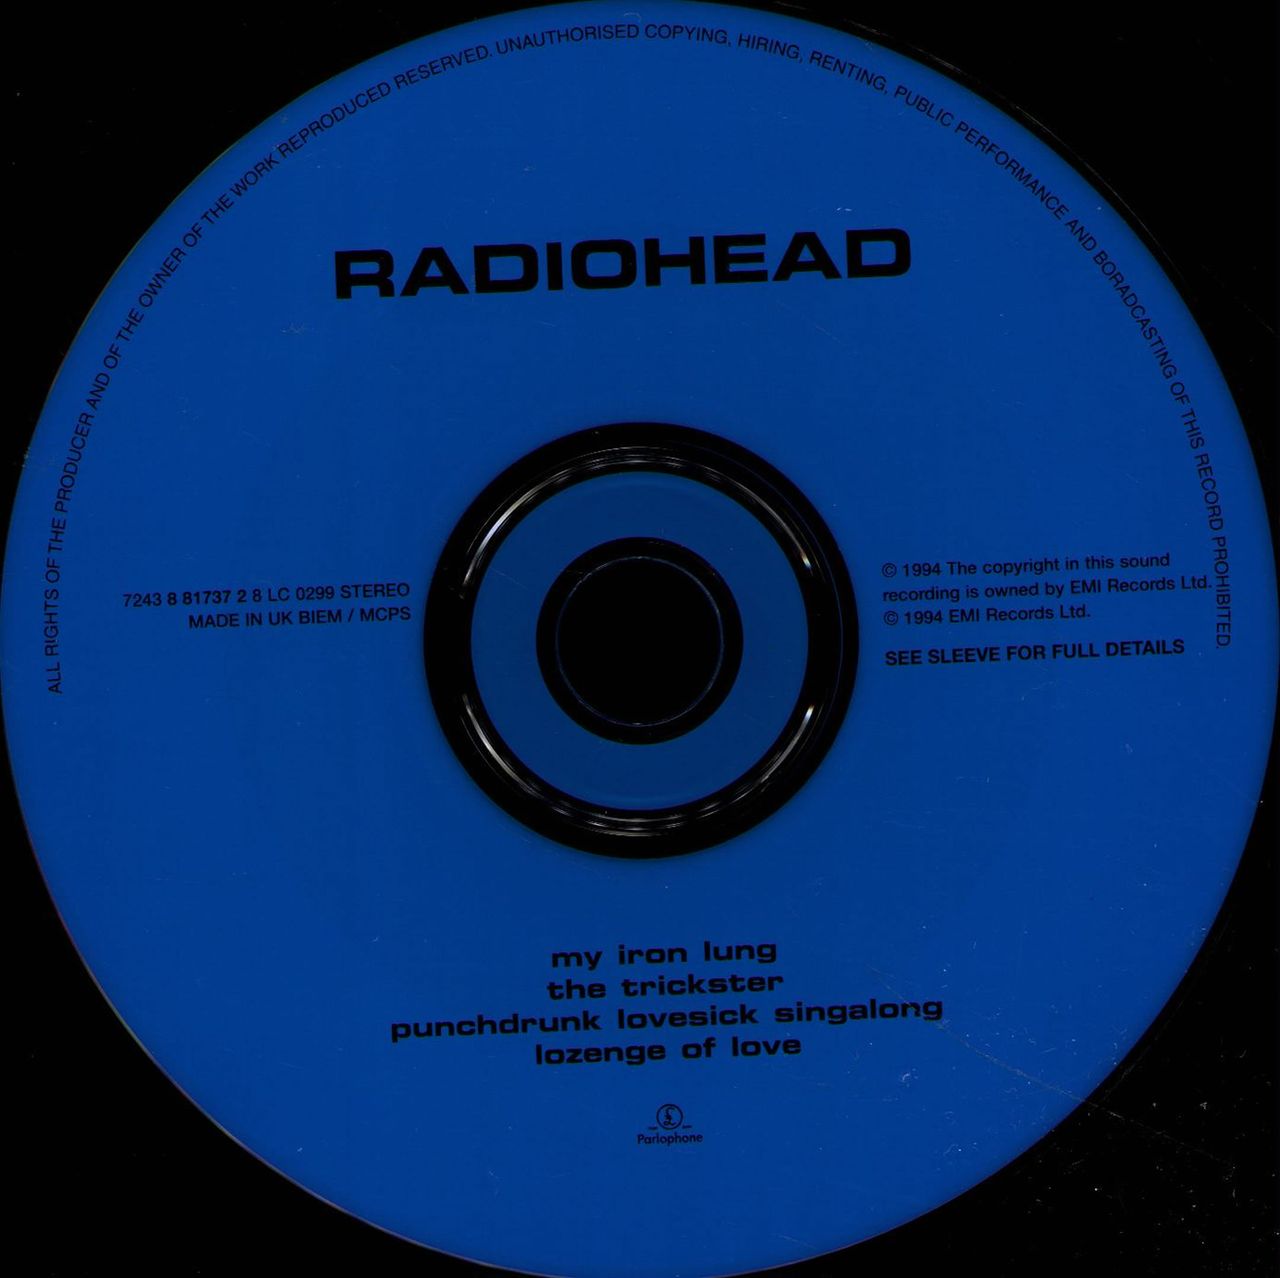 Radiohead My Iron Lung EP - CD1 Reissue UK CD single — RareVinyl.com